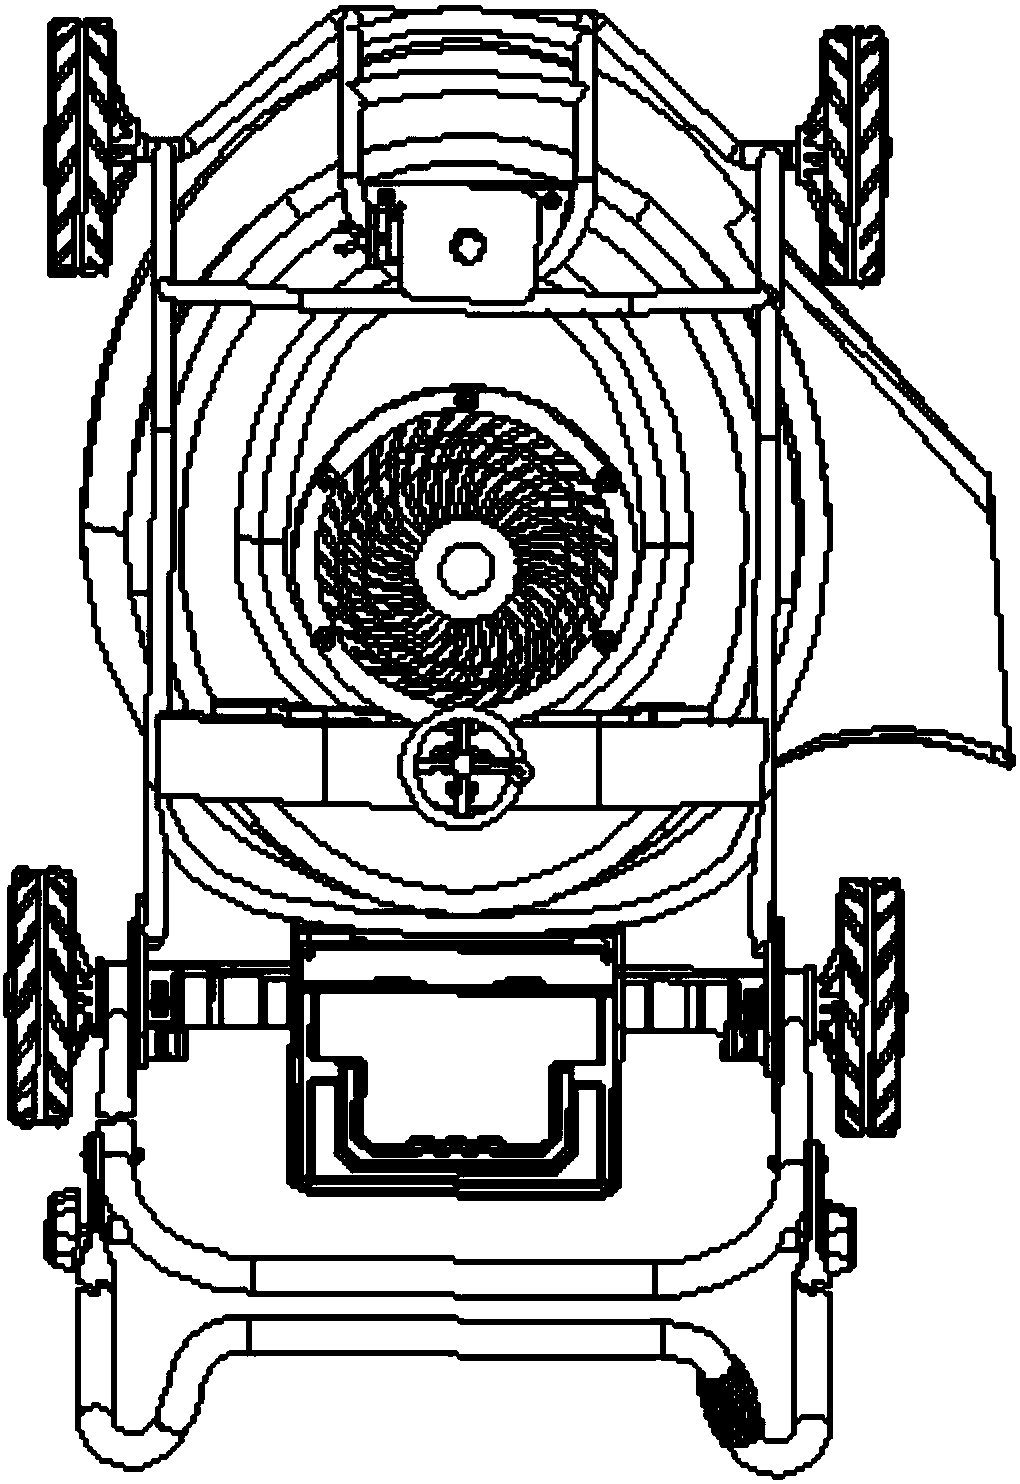 Lawn mowing mechanism